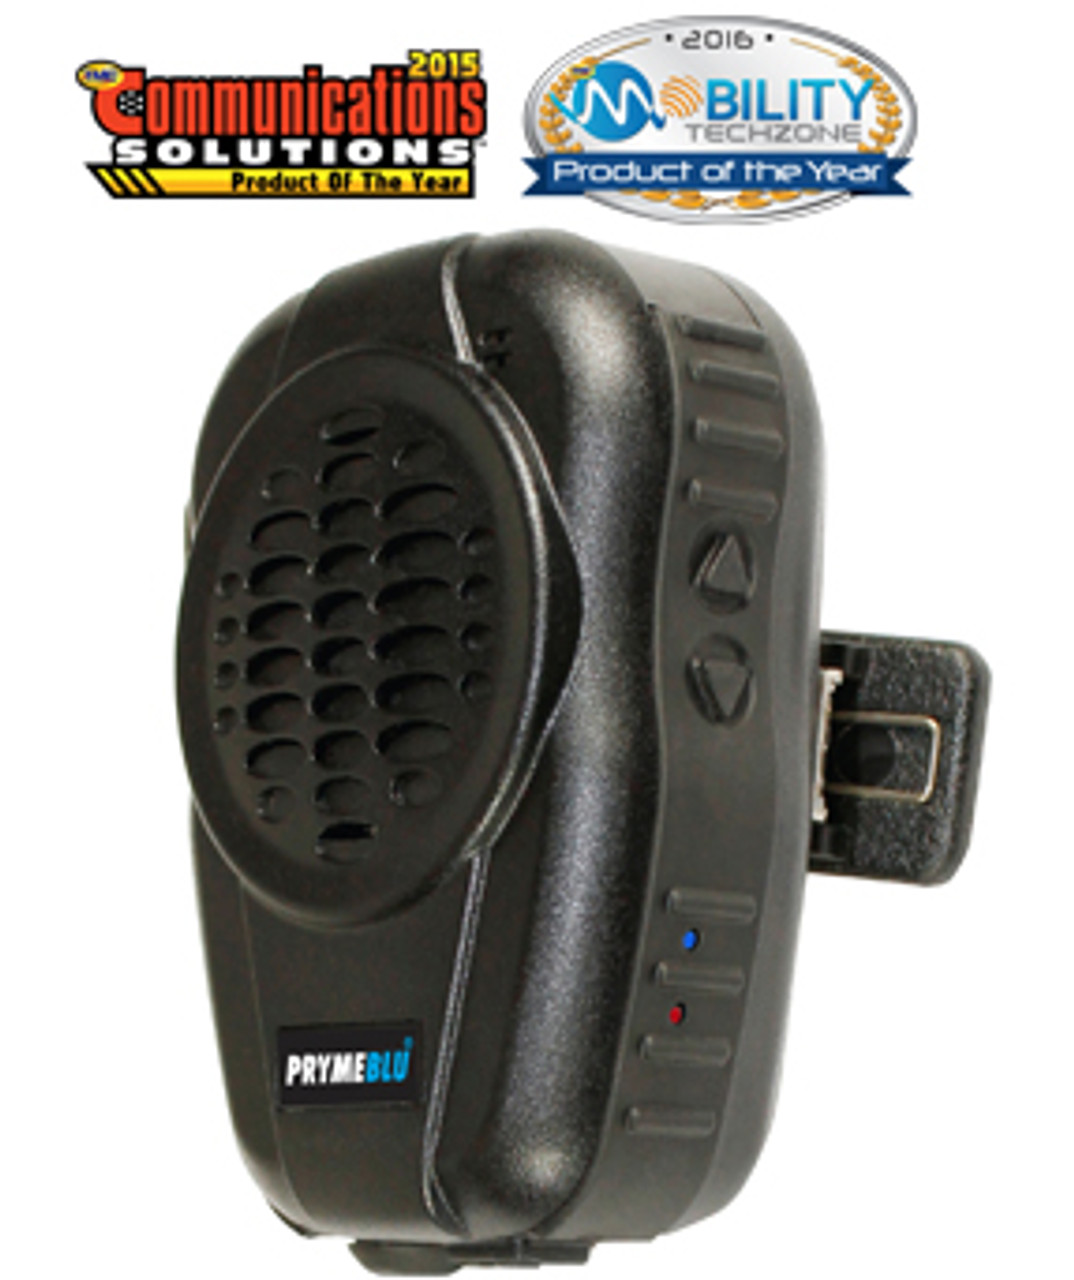 Pryme BTH-600 Award Winning Bluetooth Speaker Mic